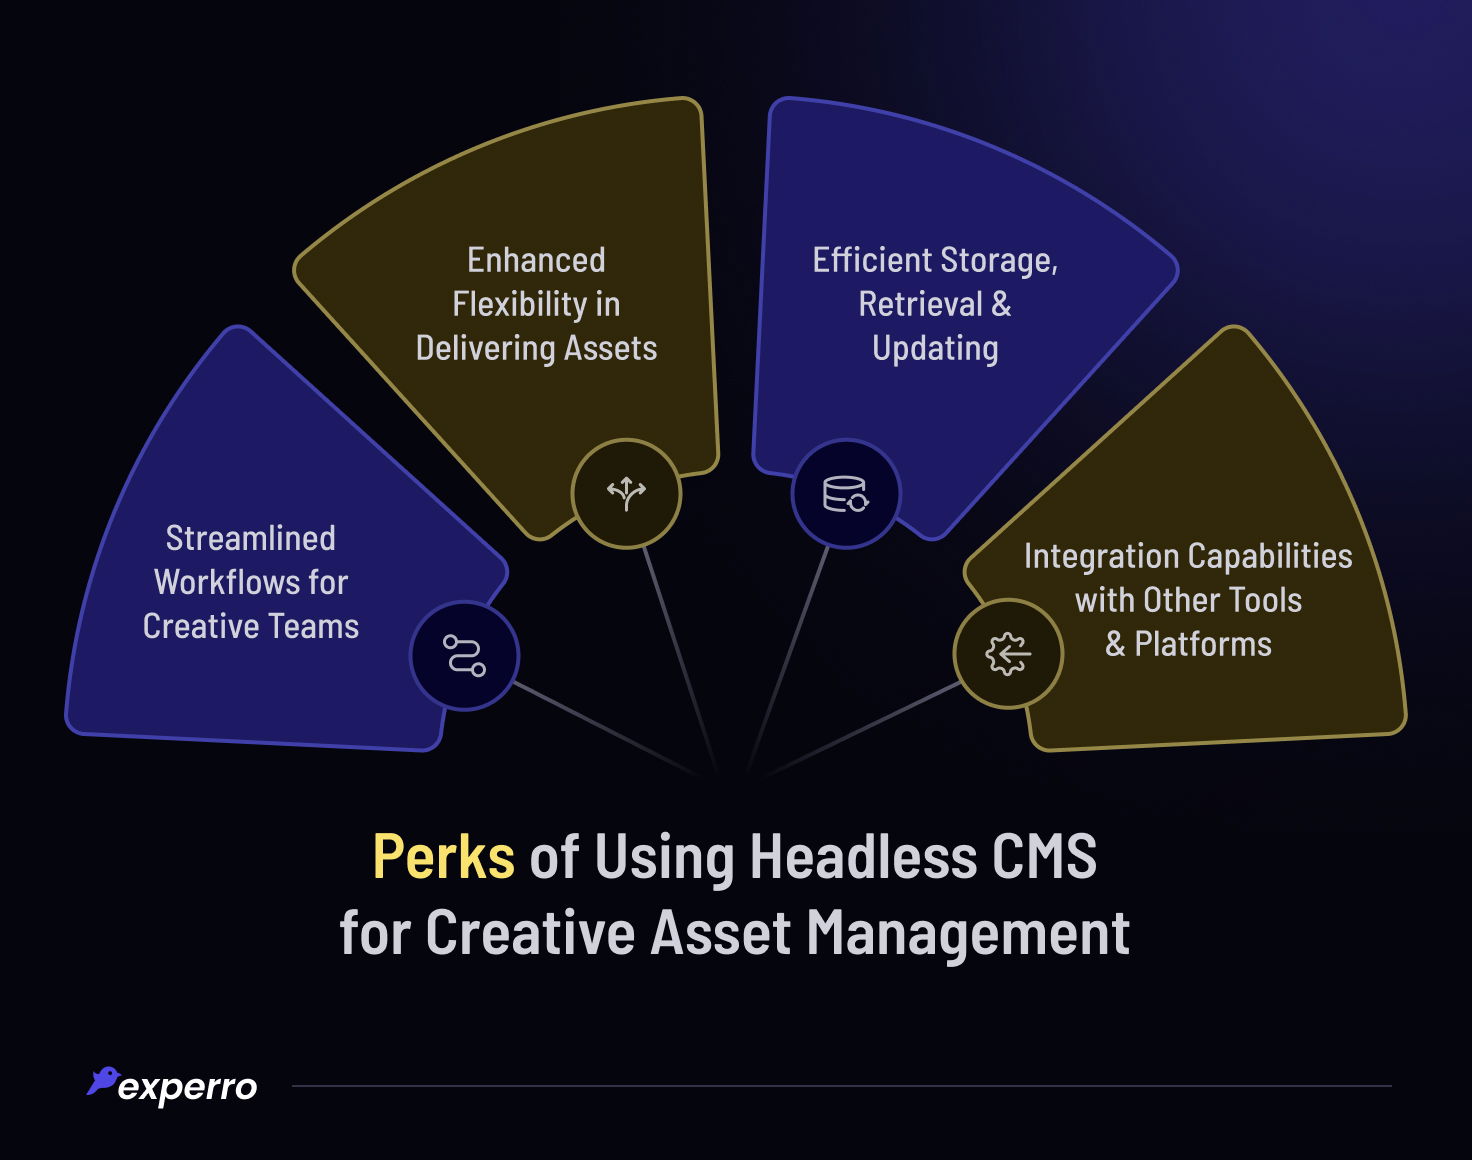 Benefits of Using Headless CMS for Creative Asset Management